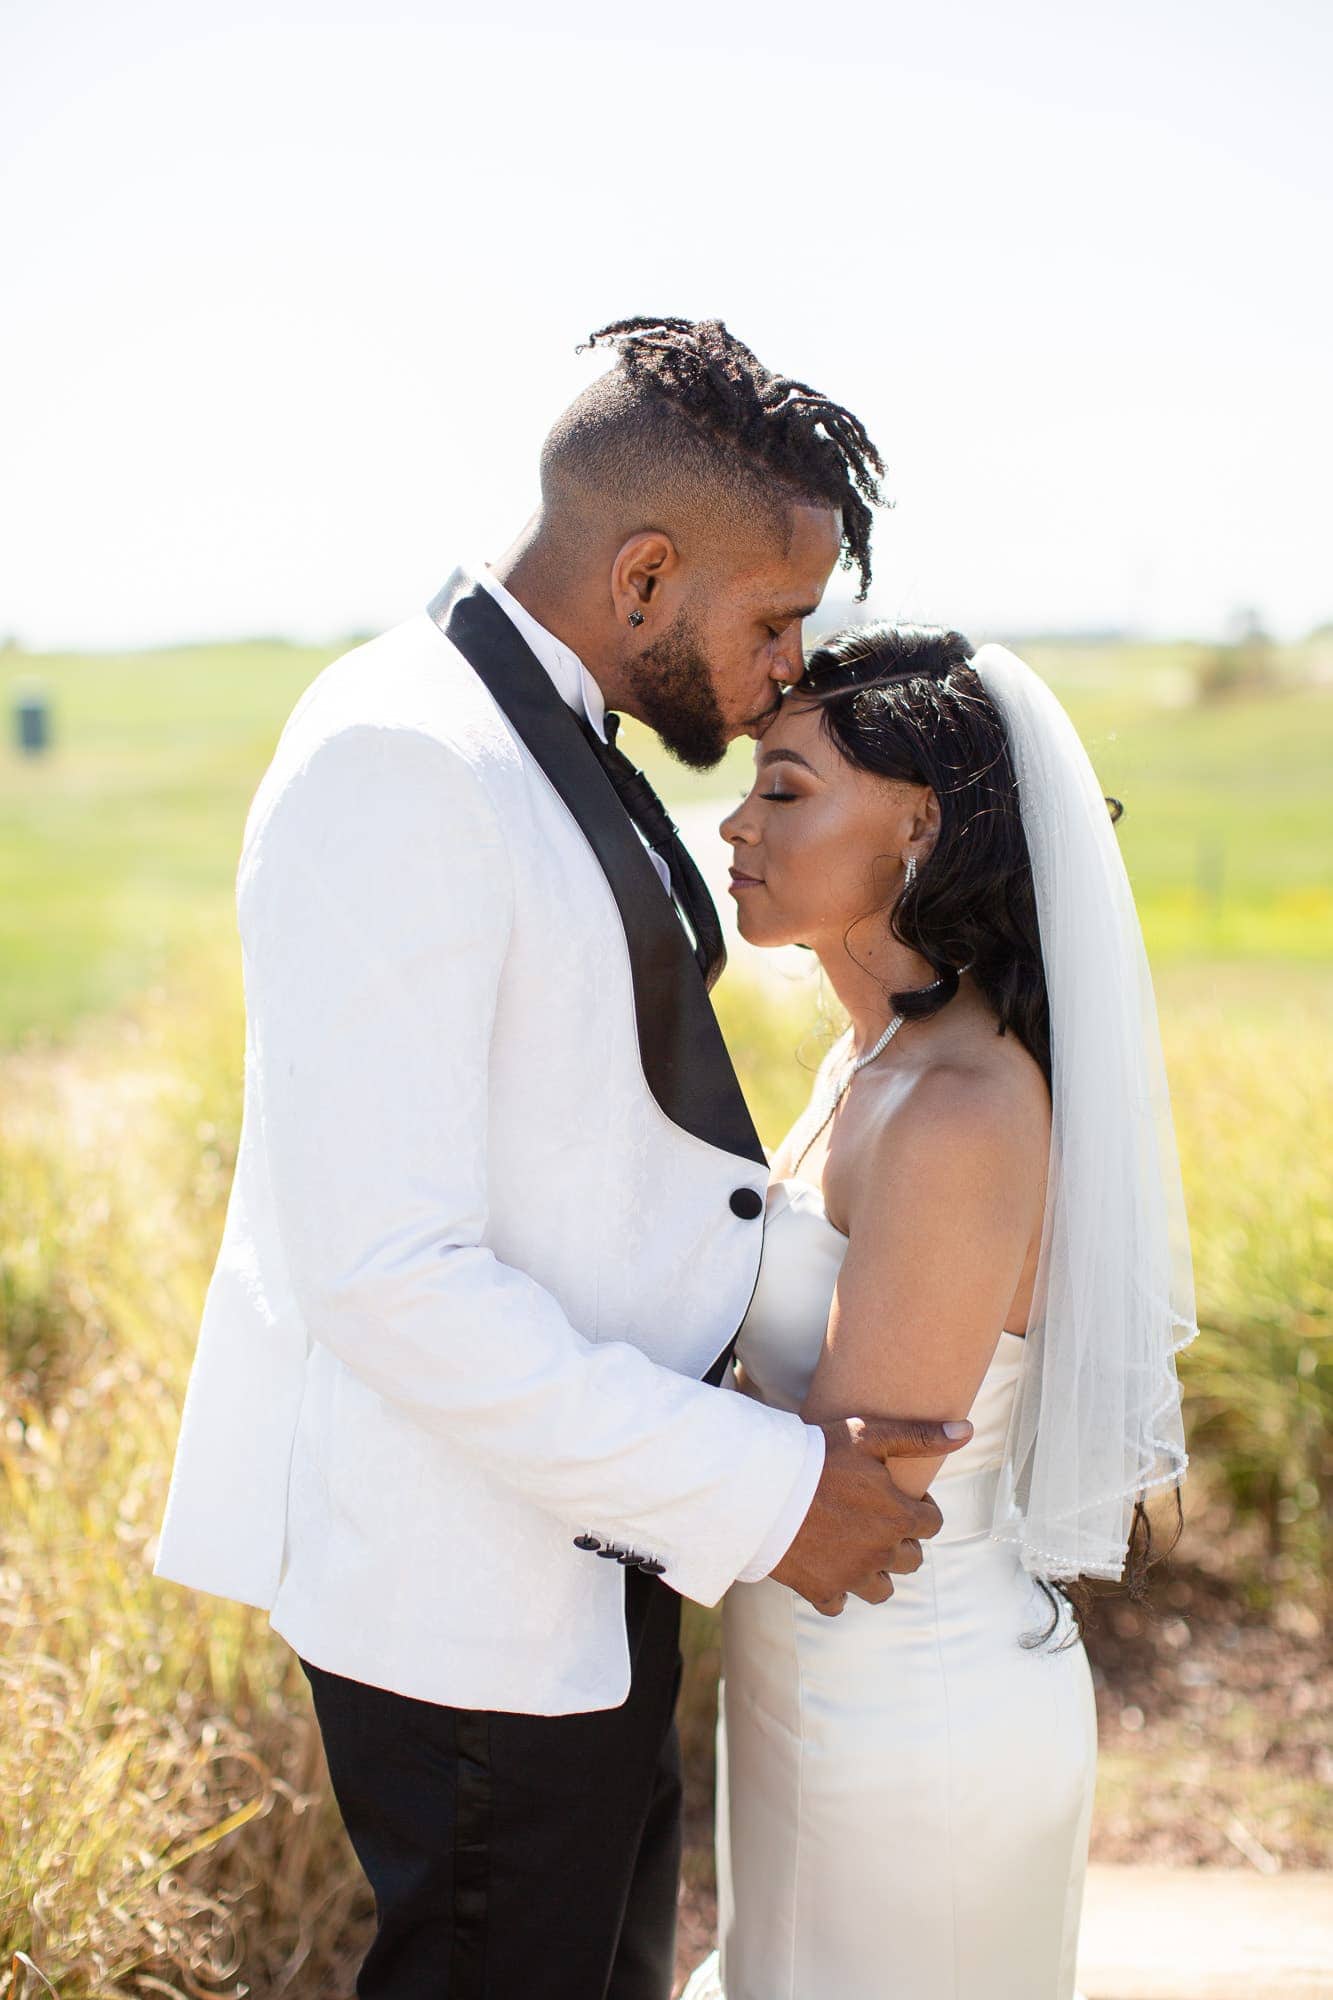 Groom in white tuxedo kissing bride on forehead outdoors